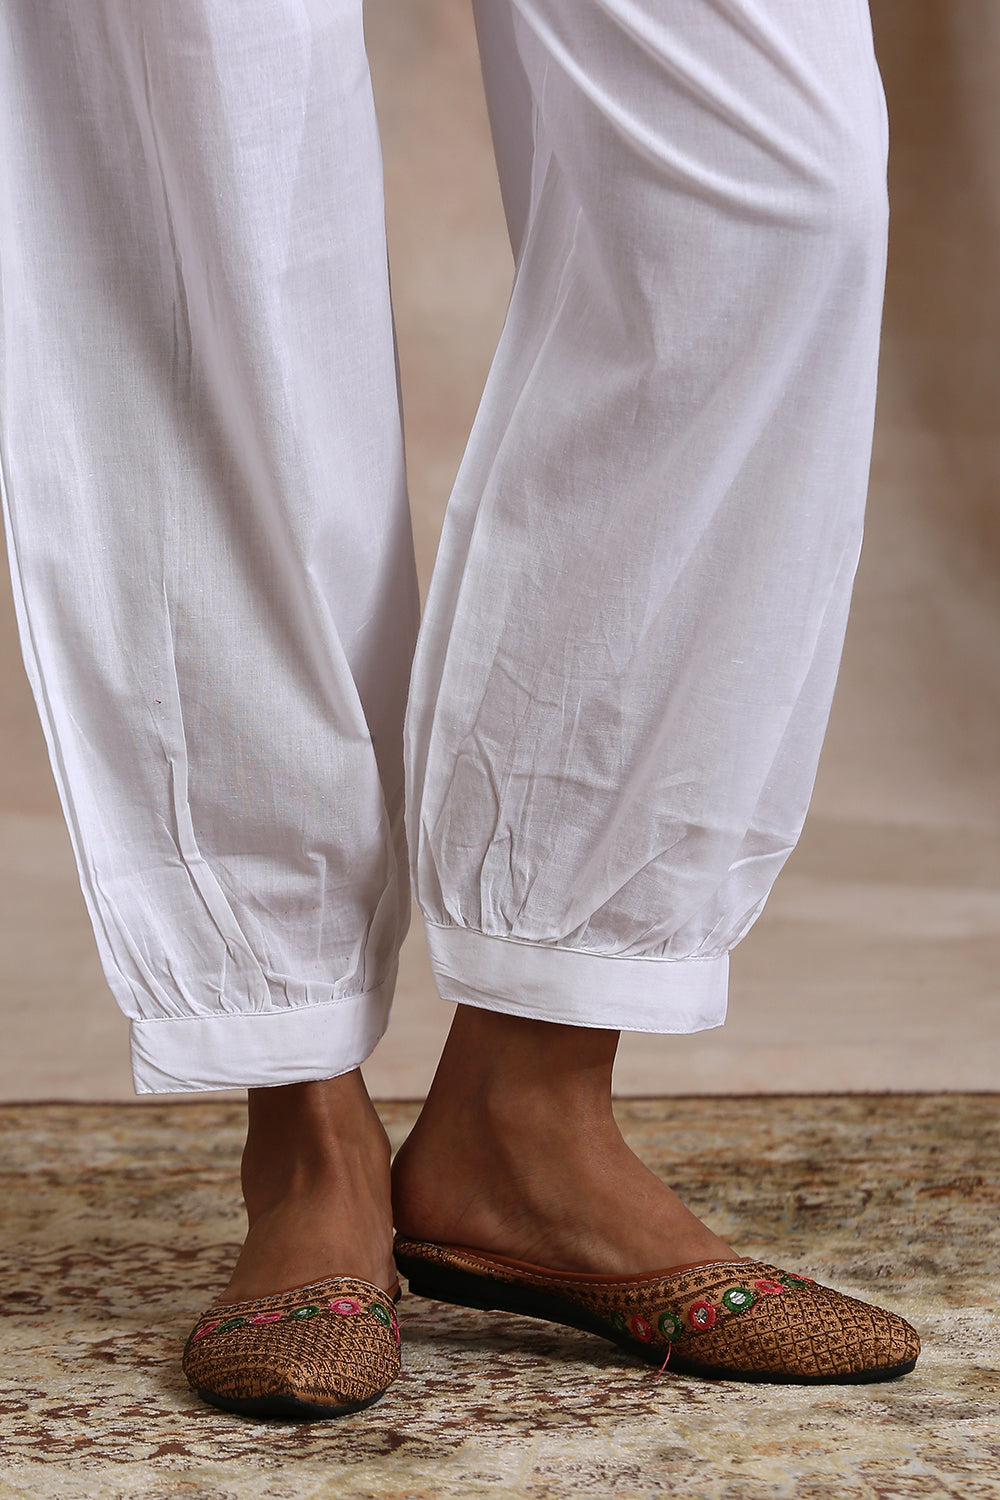 Plain White Soft Cotton Relaxed Fit Izhaar Pants